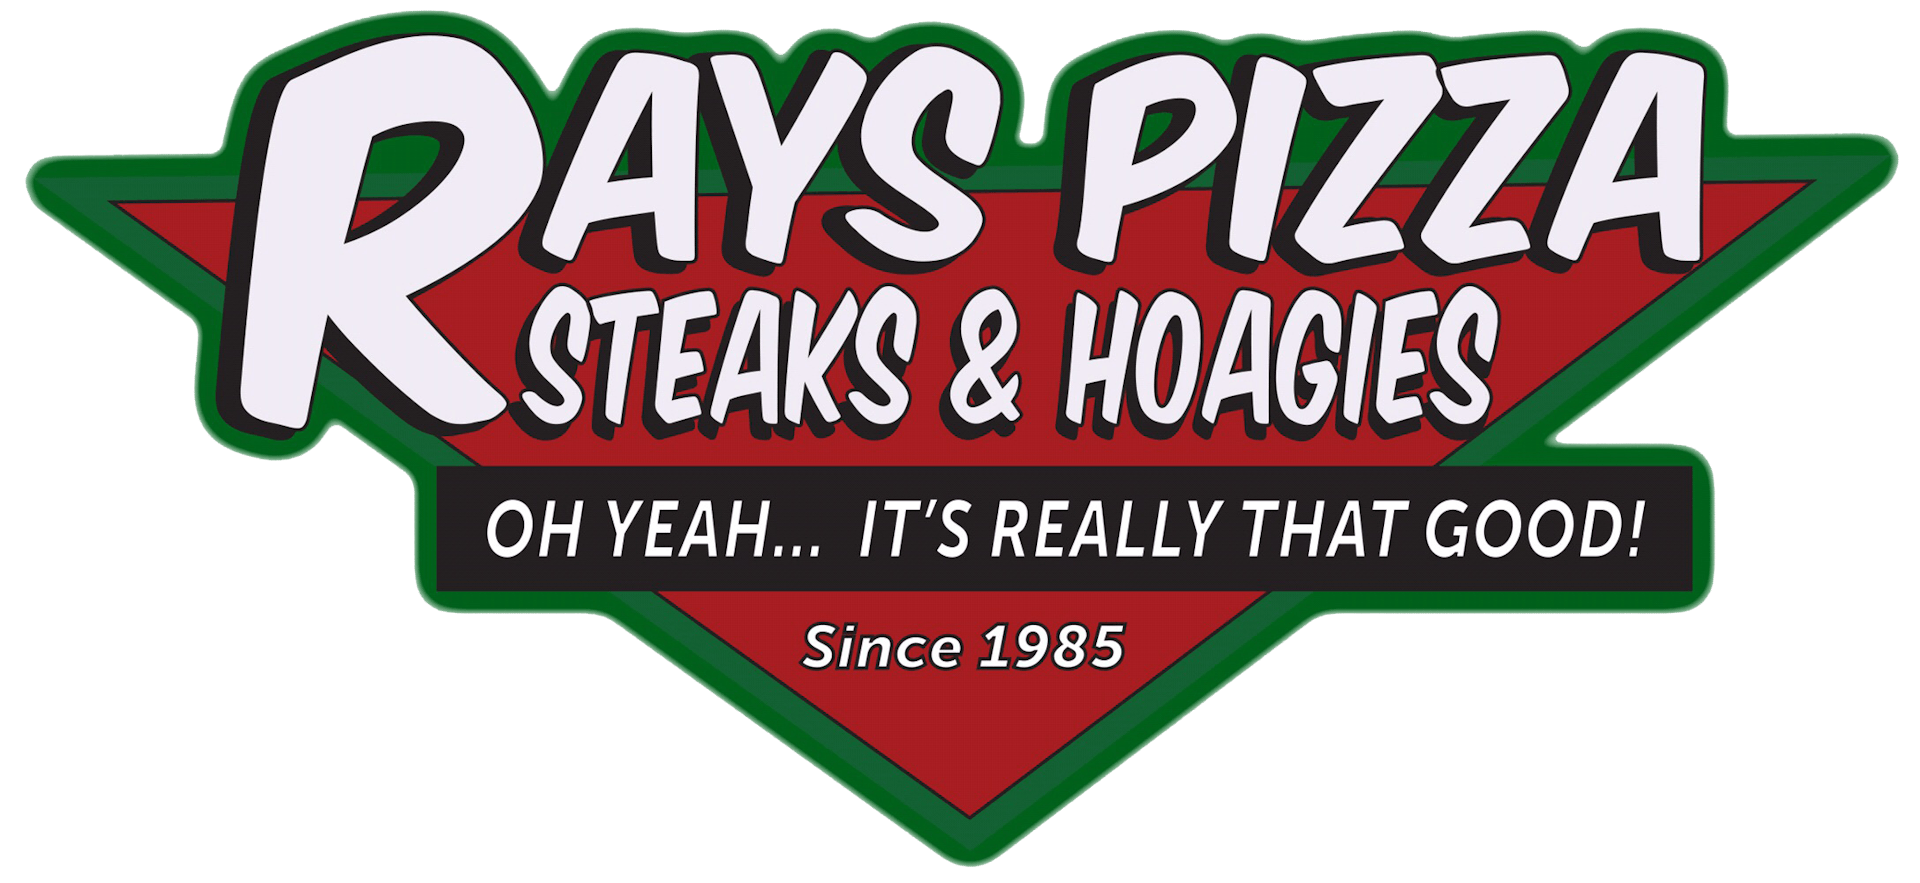 Ray's Pizzeria & Steaks